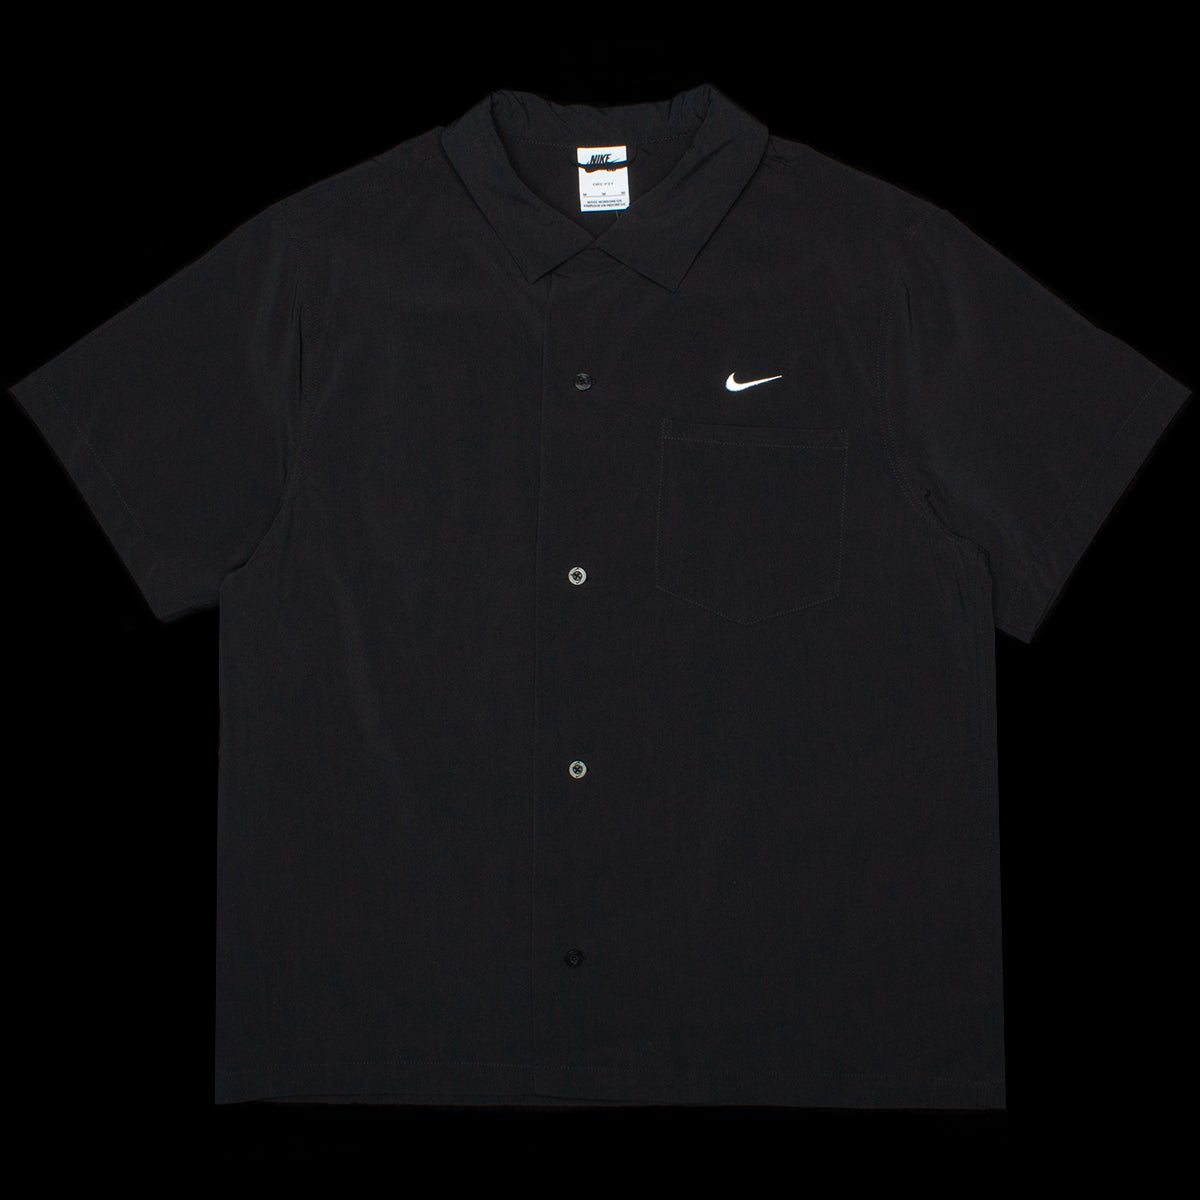 Nike SB | Bowling Shirt Style # DV9073-010 Color : Black